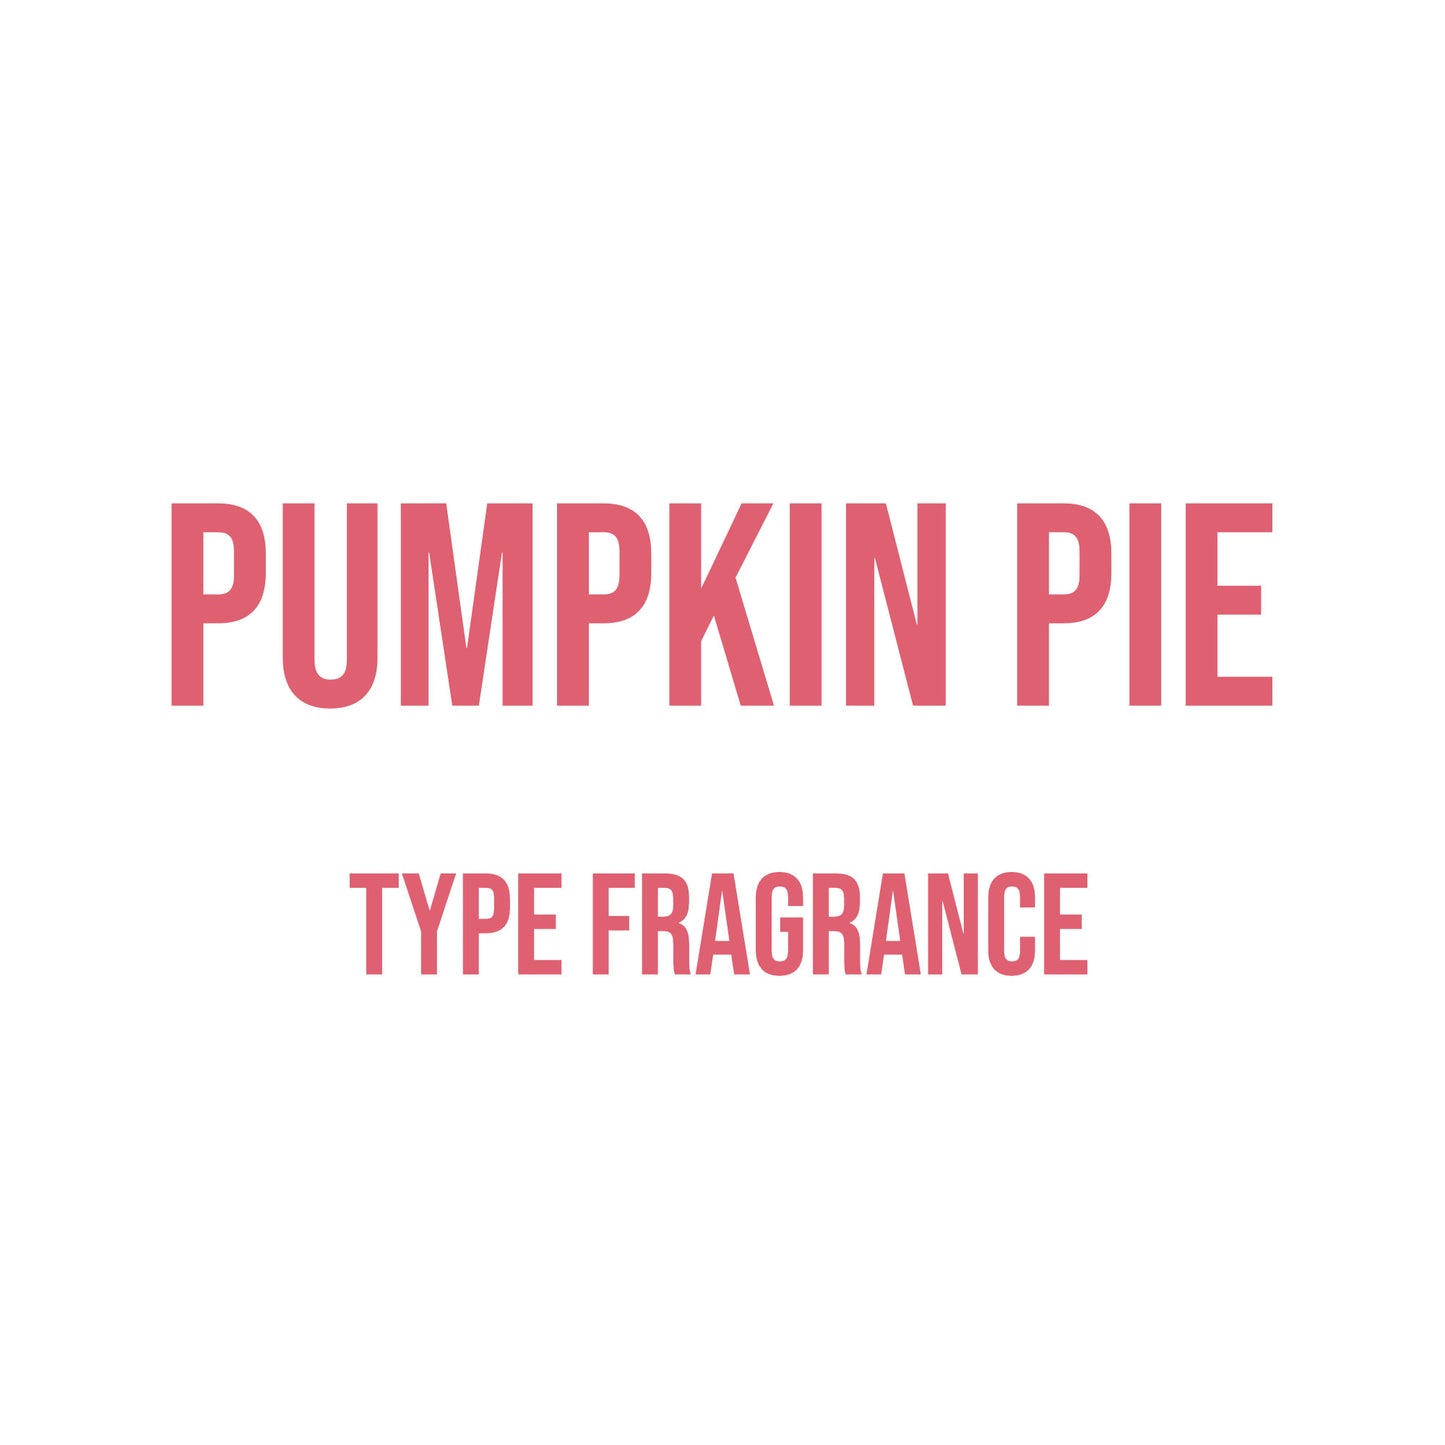 Pumpkin Pie Type Fragrance